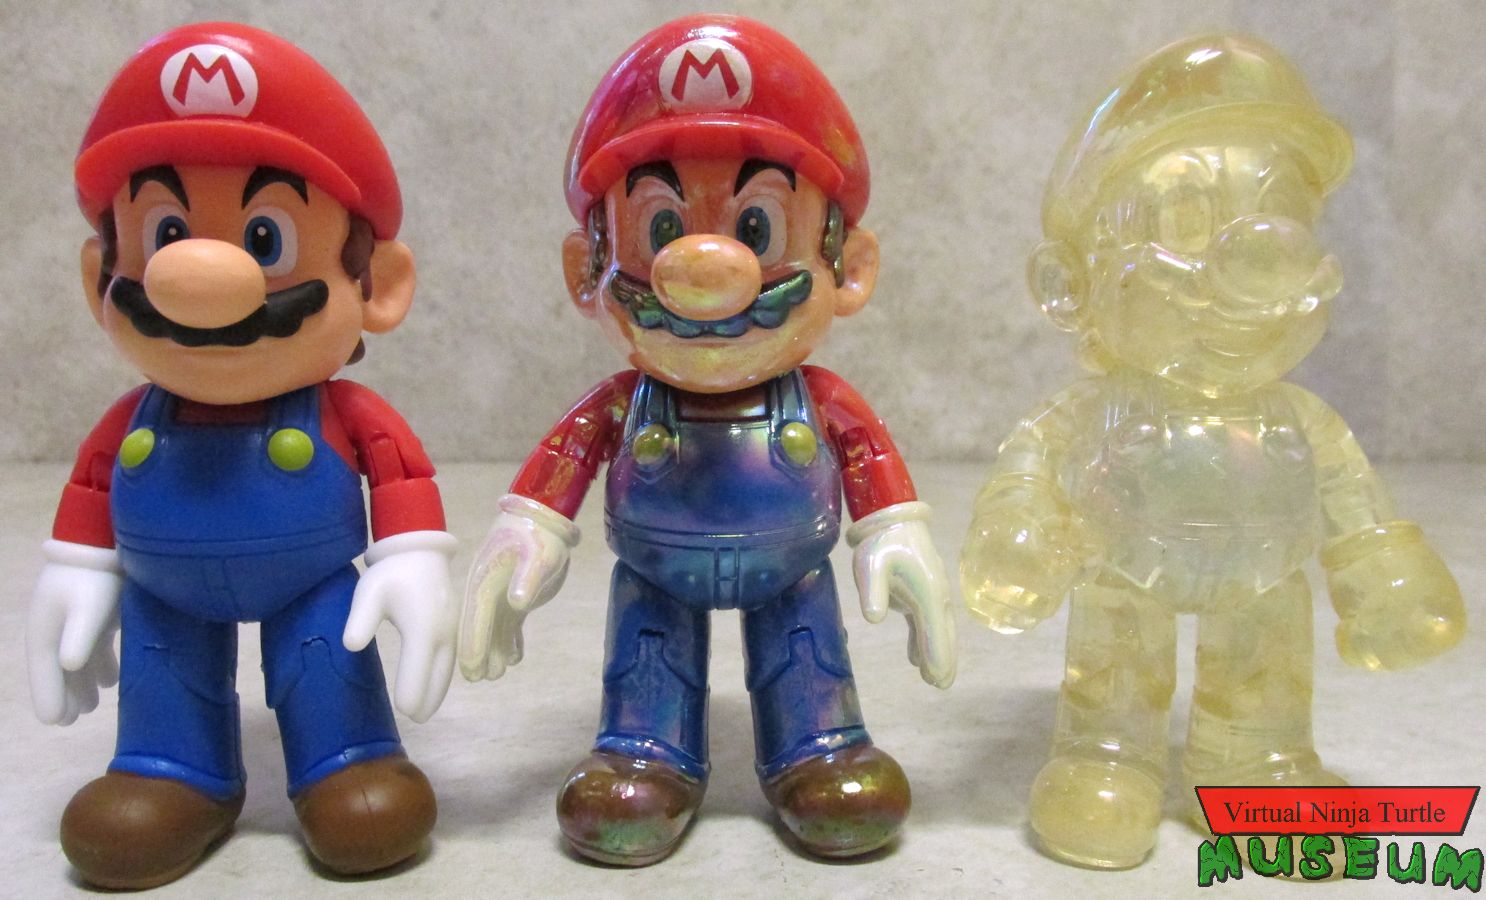 Mario with both Star Power Marios